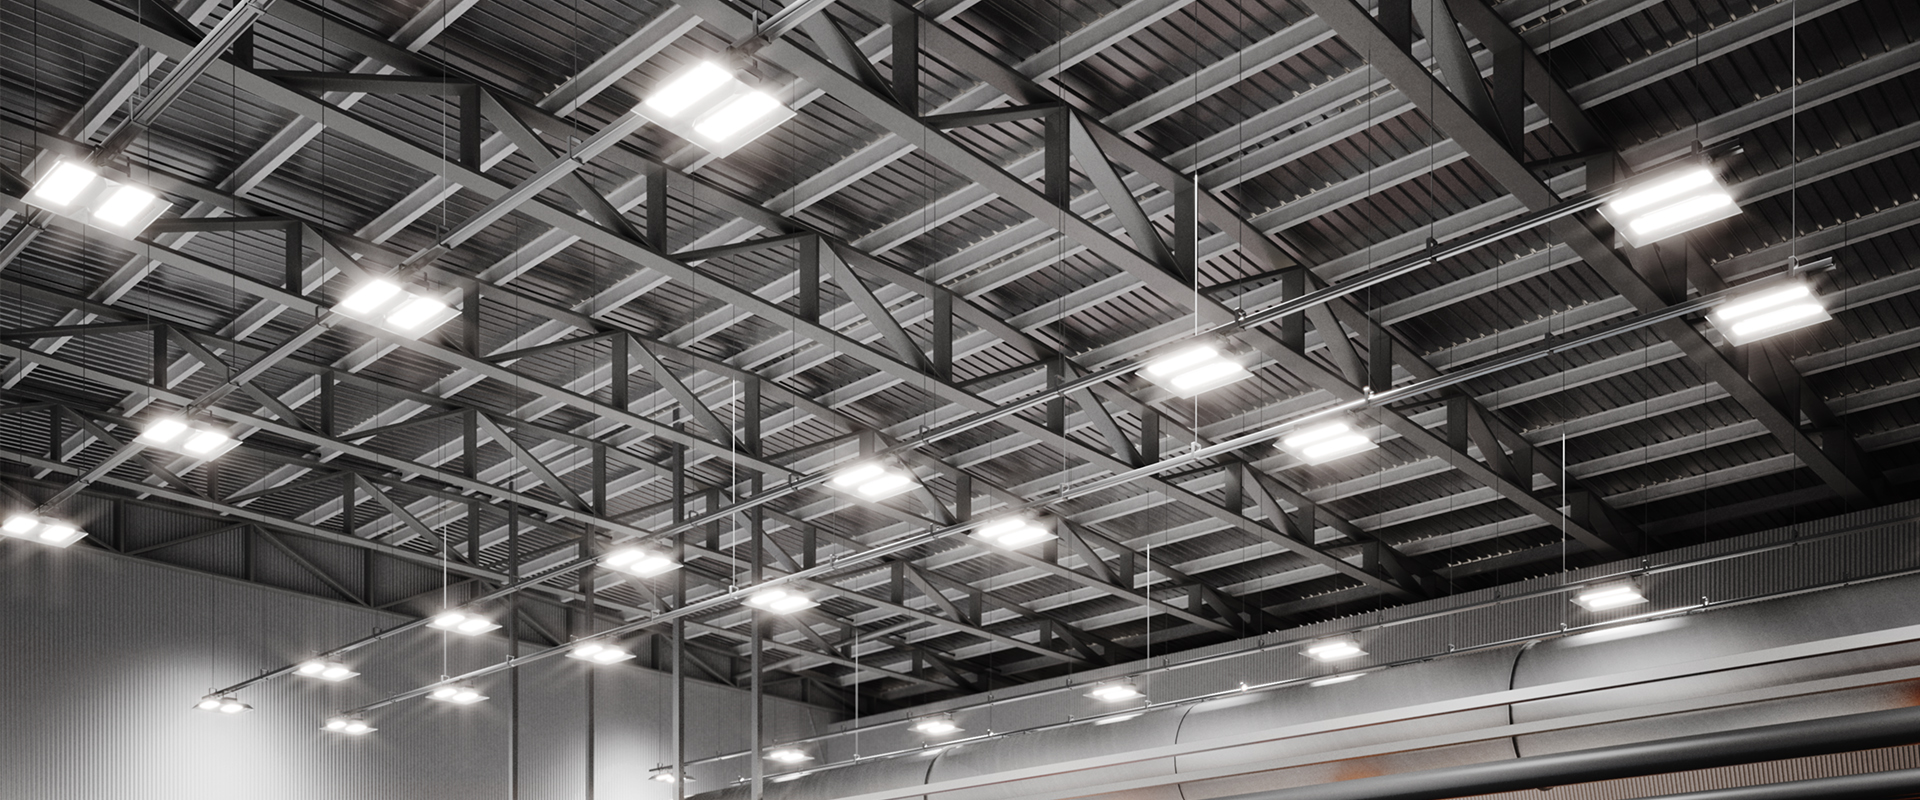 Industrial warehouse LED lighting